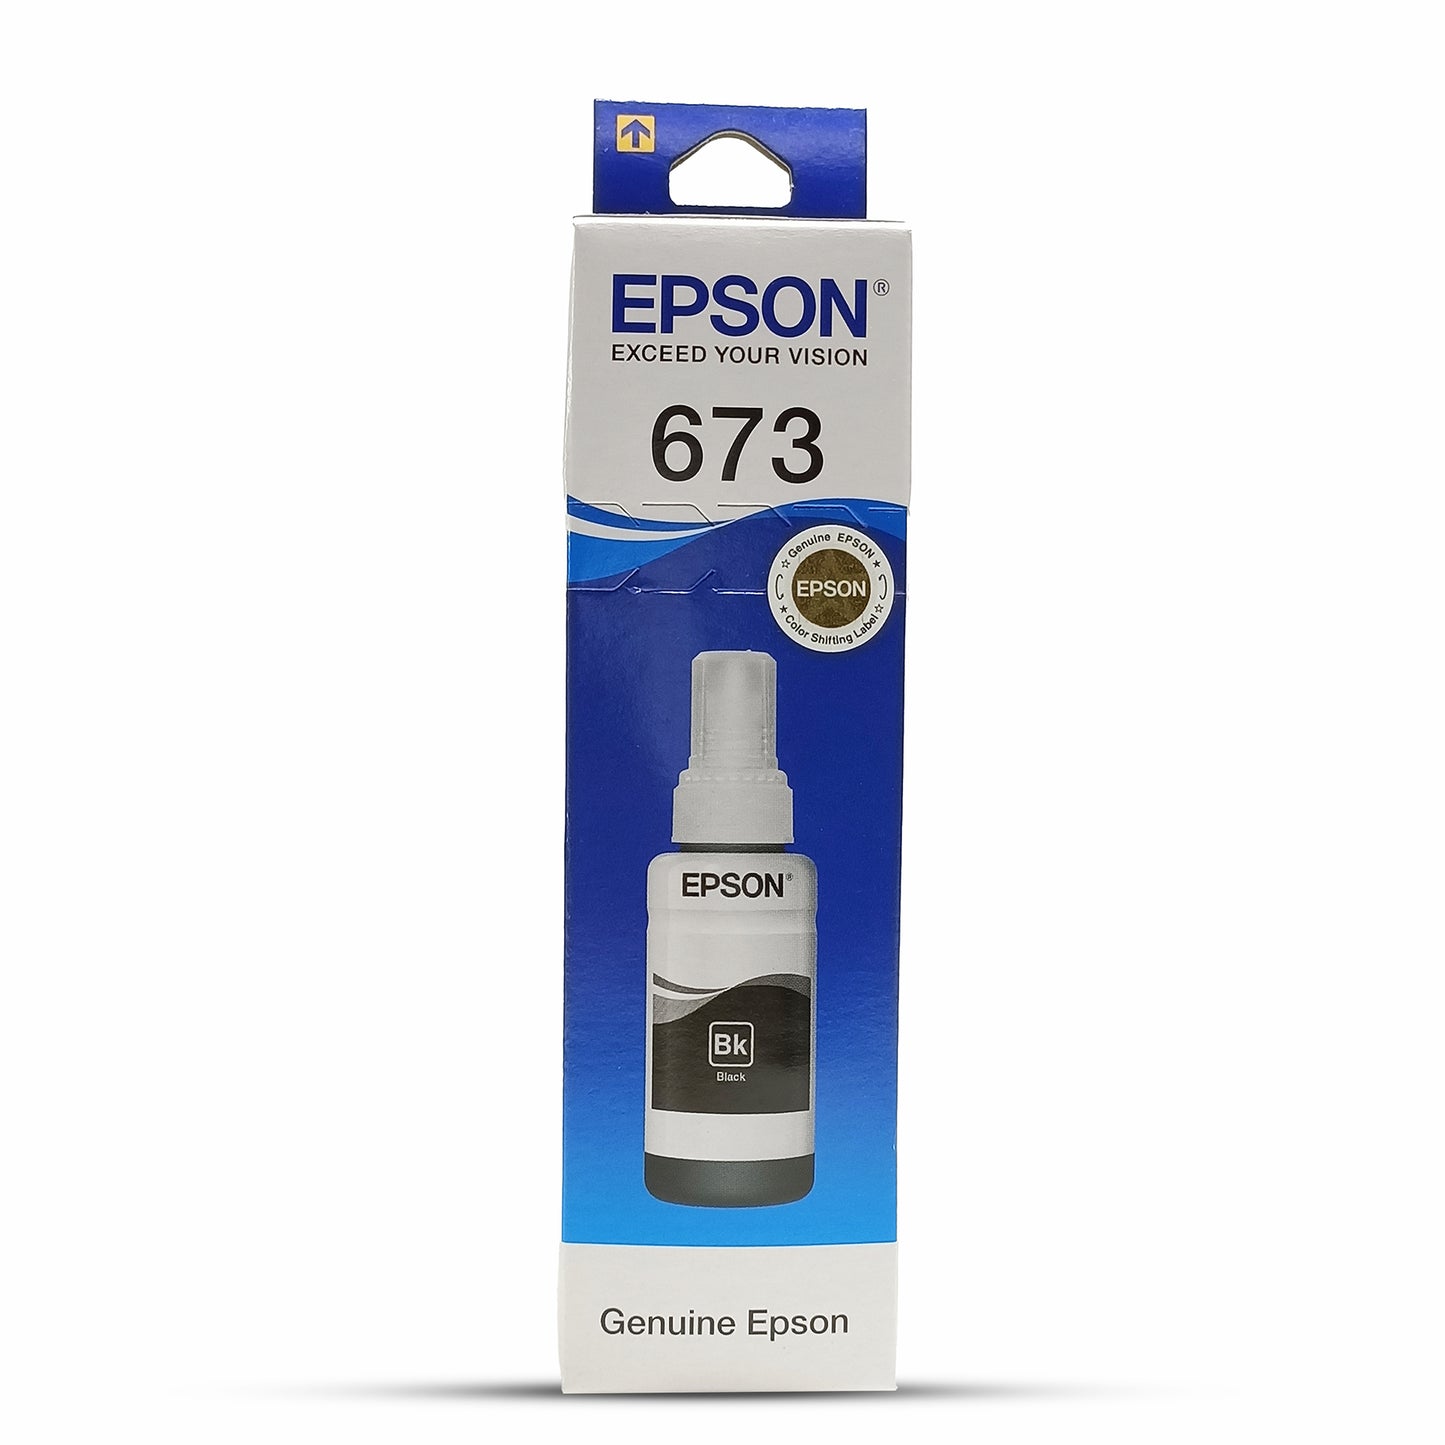 Epson 673 Ink Refill Bottle (70mL) for Printer EcoTank L800 / L805 / L810 / L1800 (Black, Cyan, Magenta, Yellow, Light Cyan, Light Magenta)